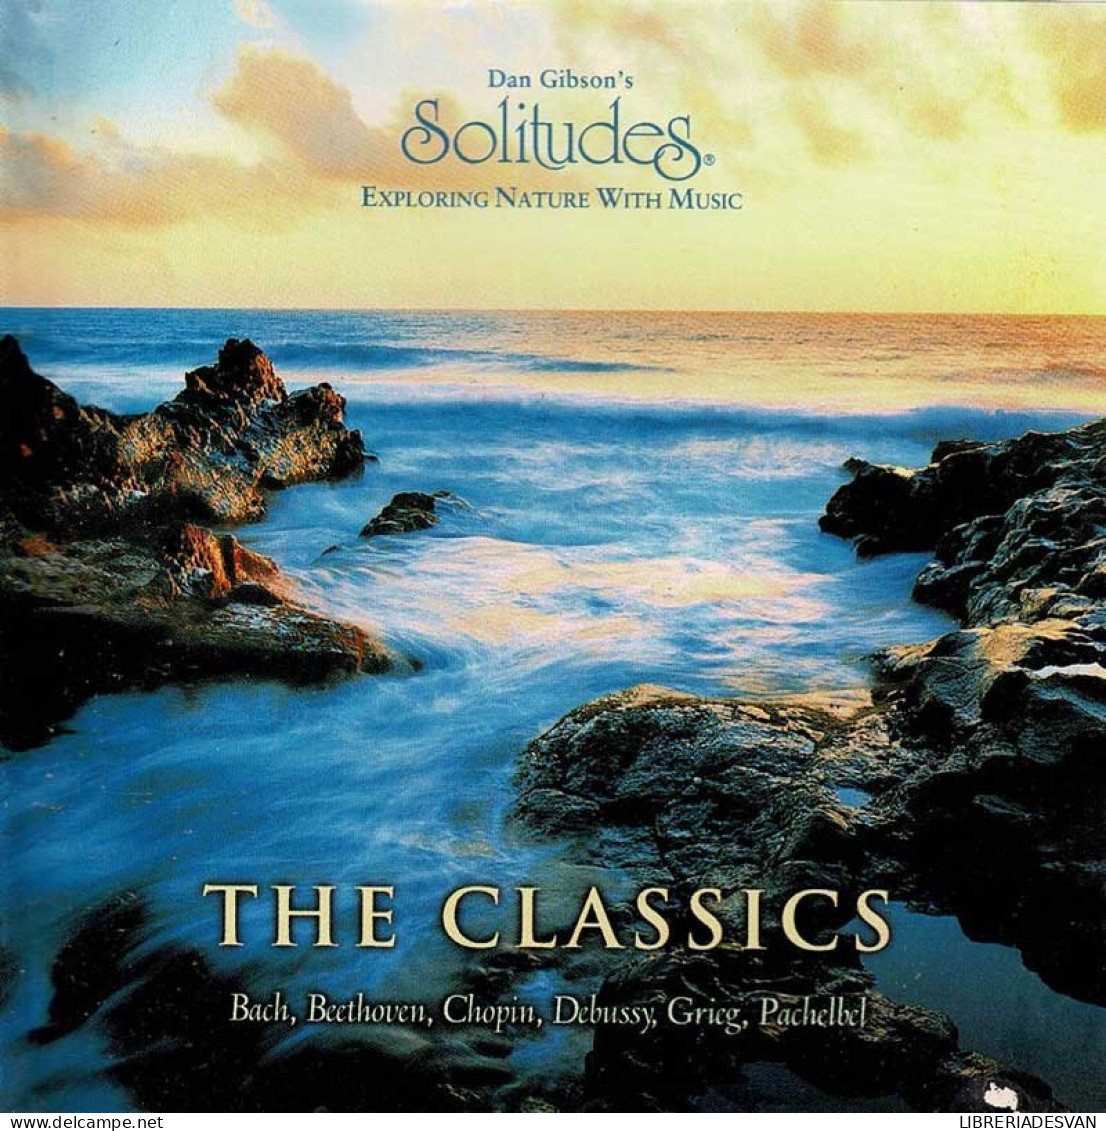 Dan Gibson's Solitudes: The Classics. CD - New Age